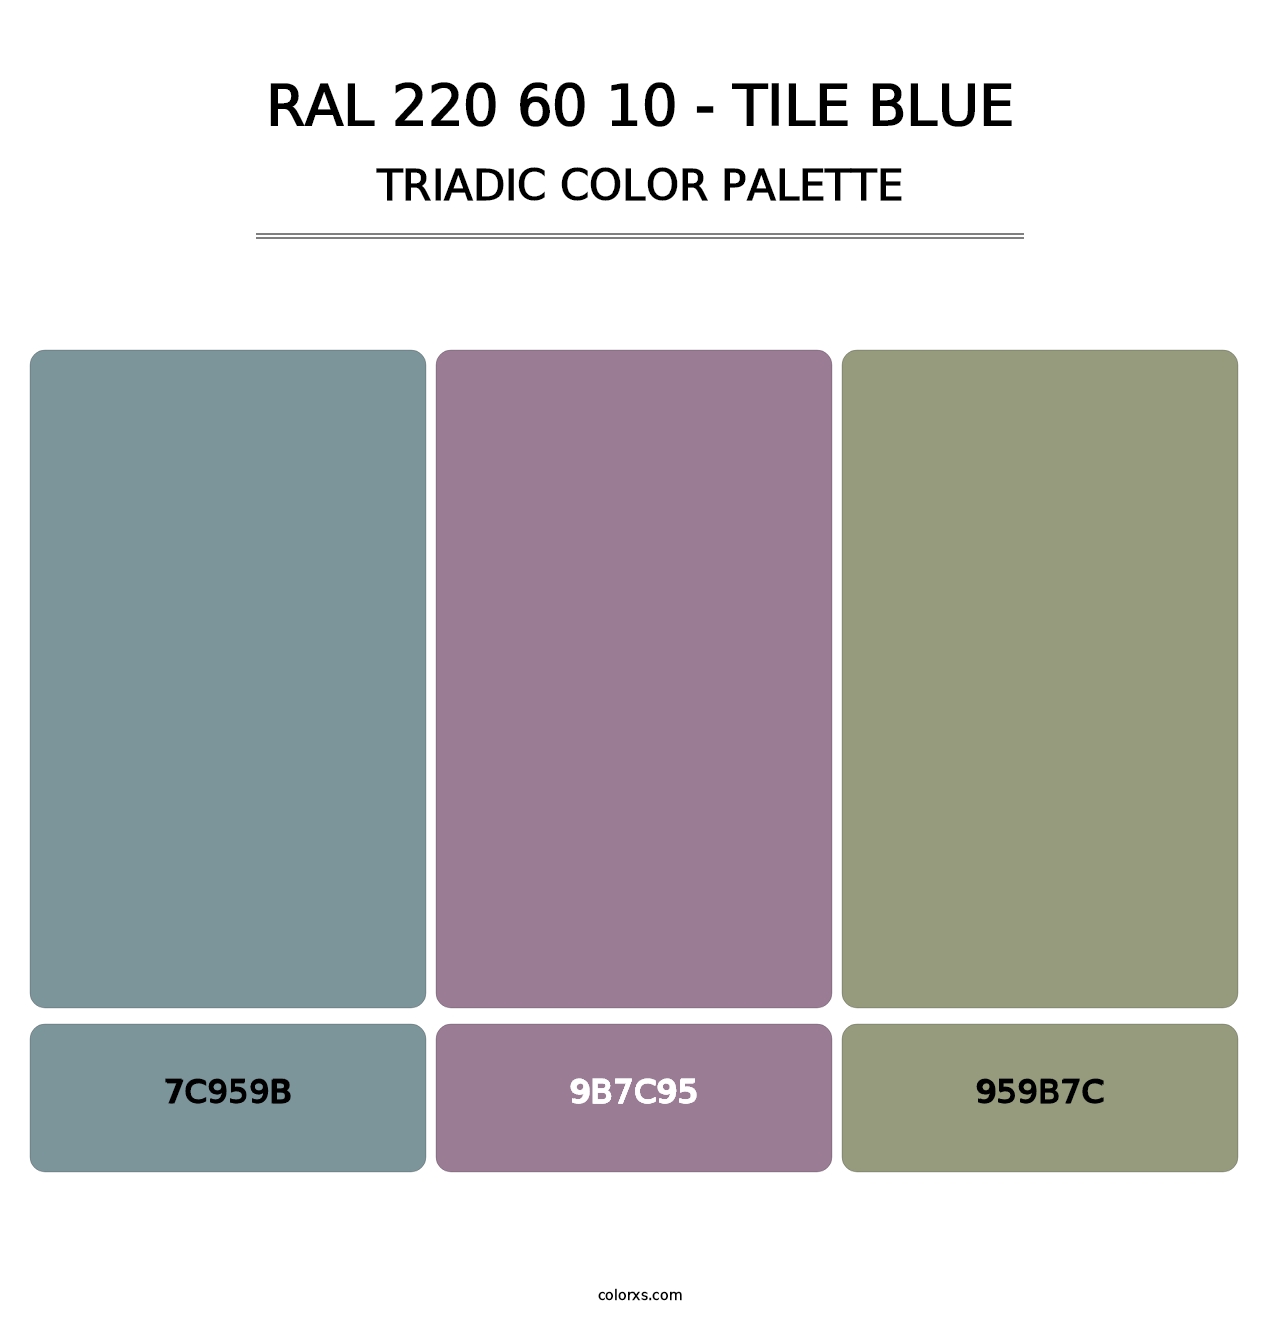 RAL 220 60 10 - Tile Blue - Triadic Color Palette